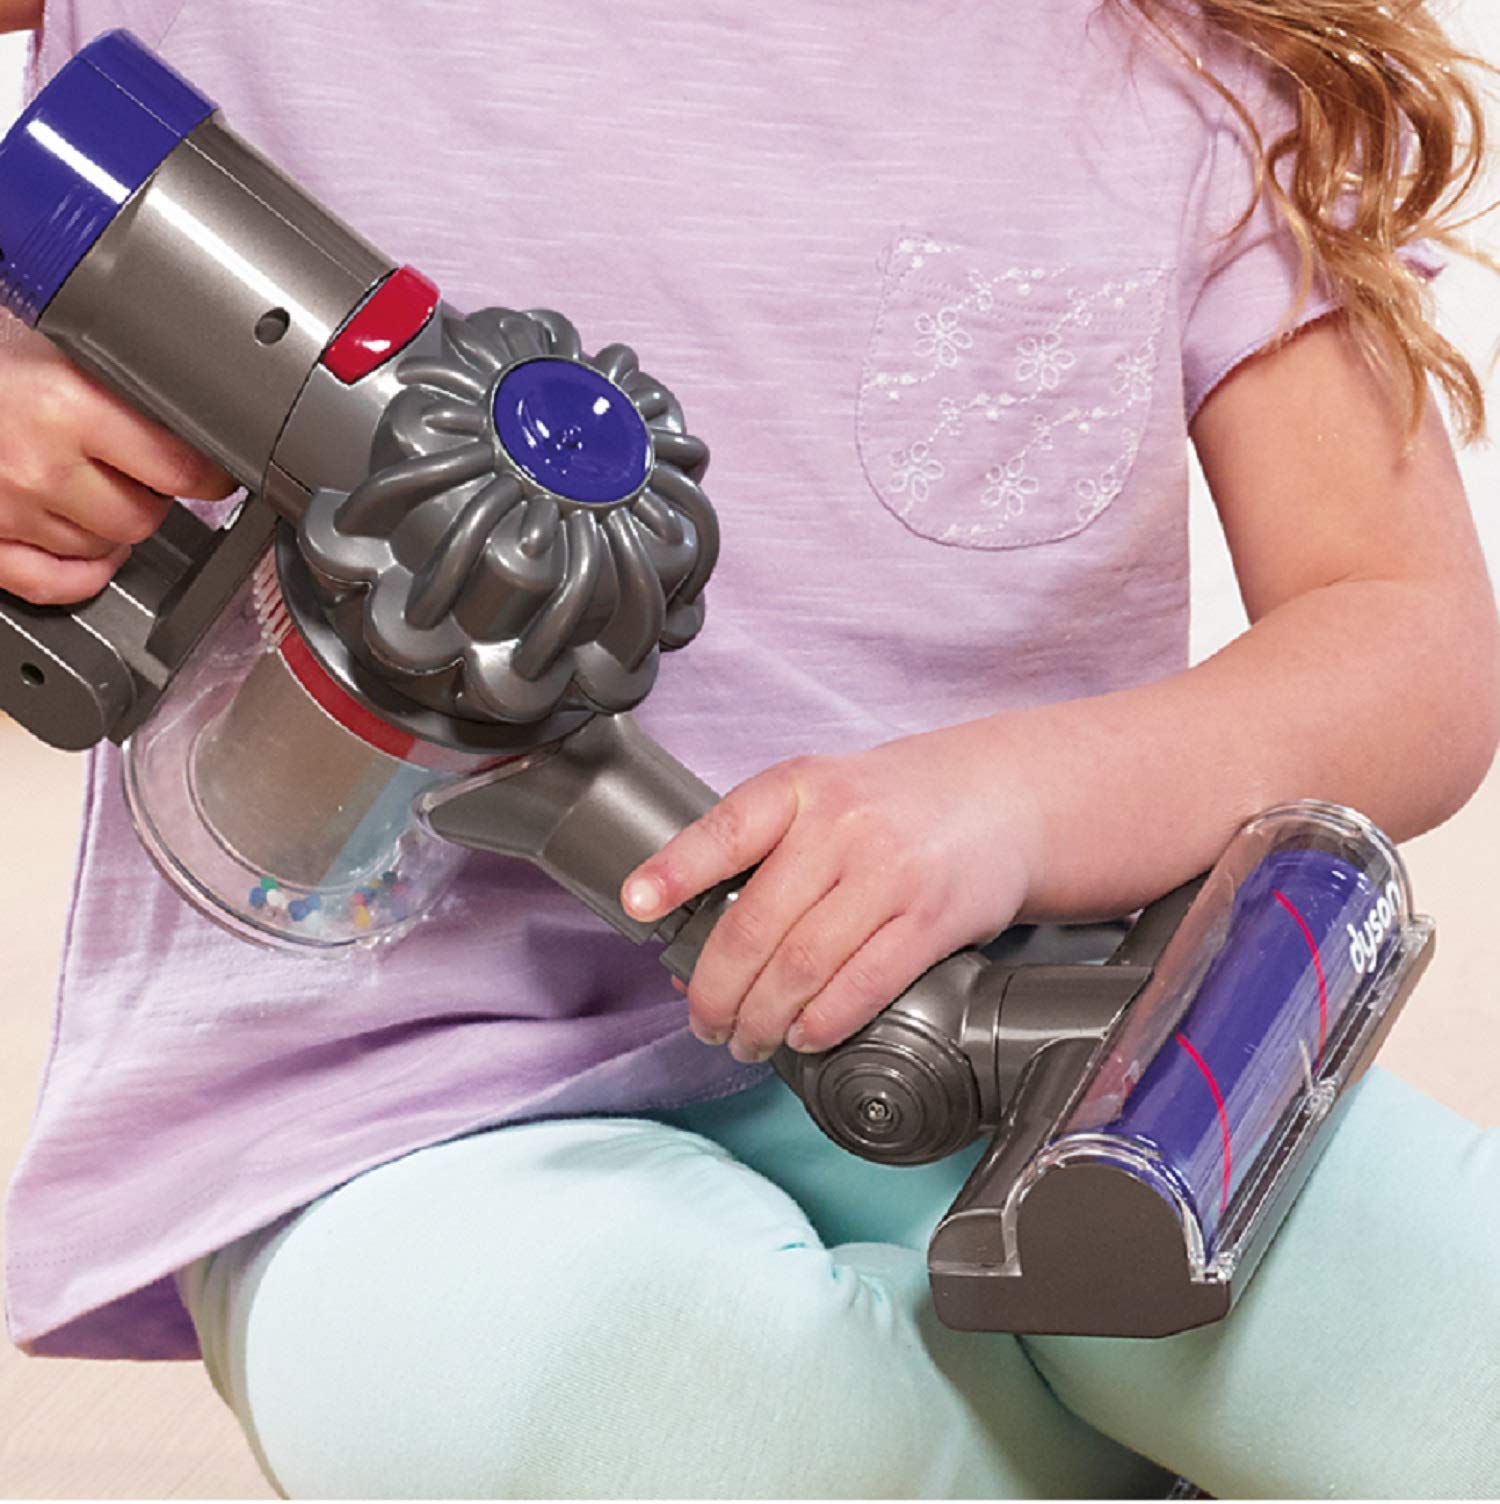 Casdon Little Helper Dyson Cord-free Vacuum Cleaner Toy, Grey, Orange and Purple (68702)